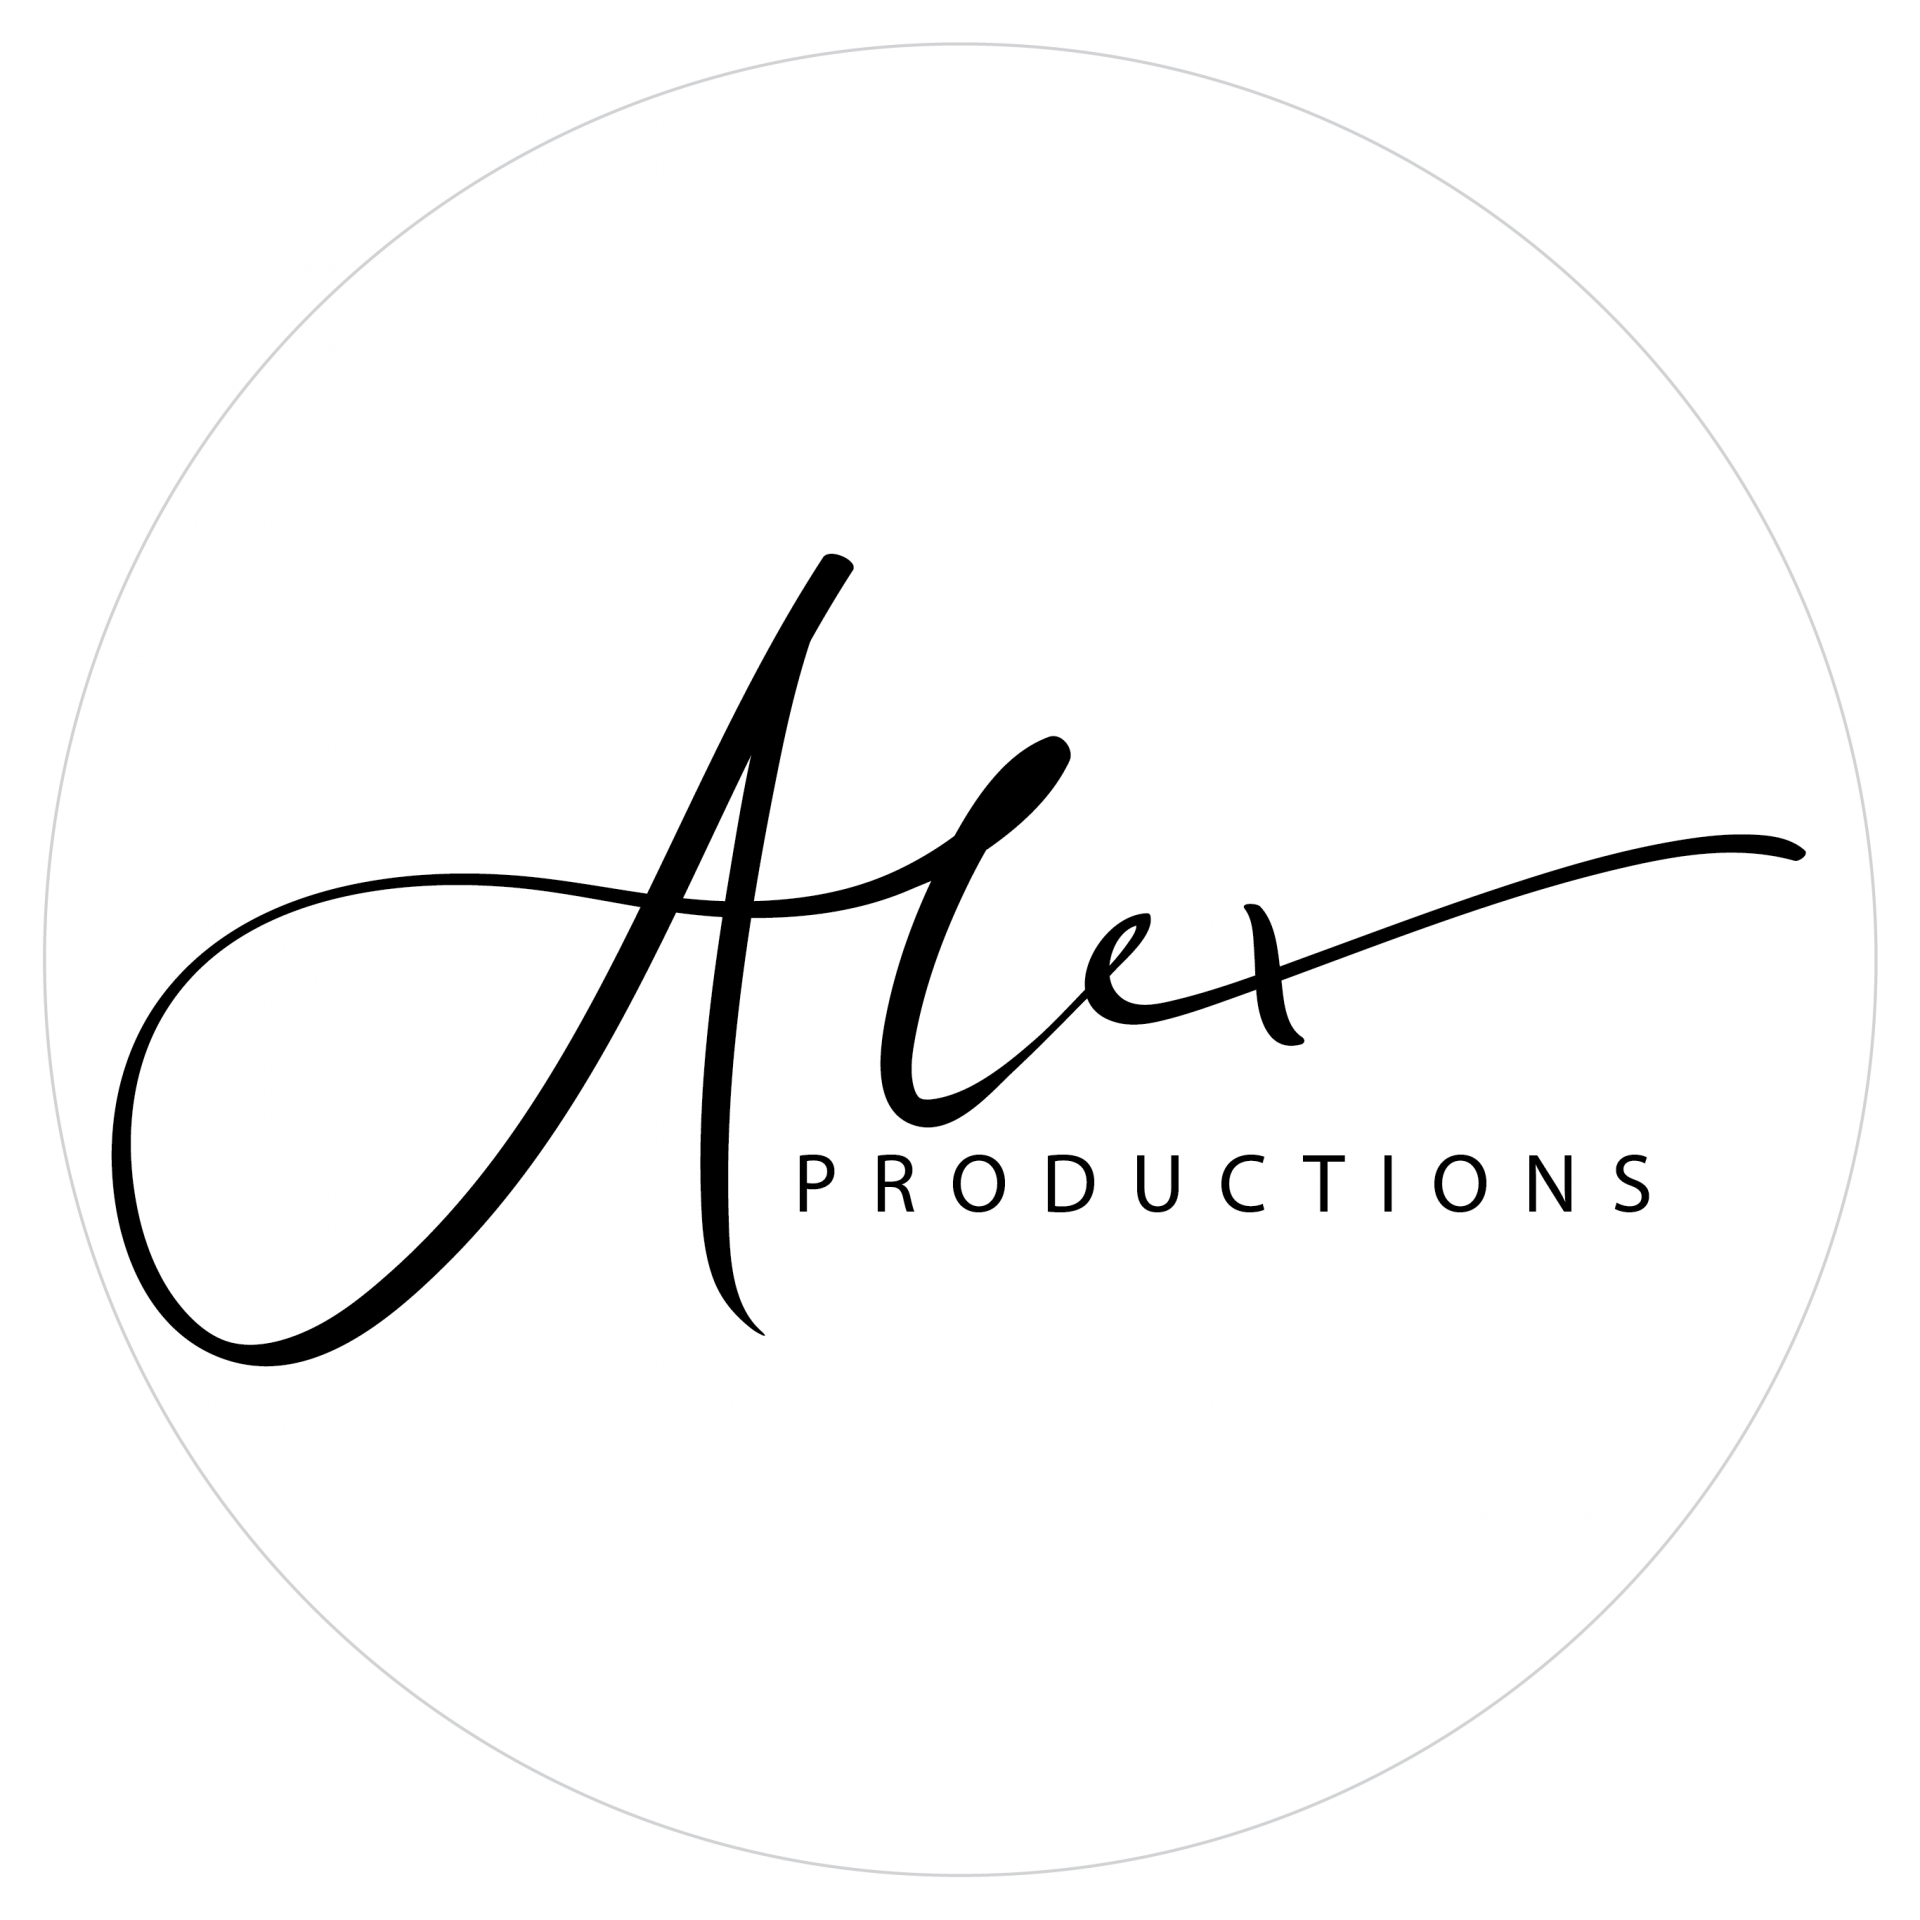 ALEX PRODUCTIONS